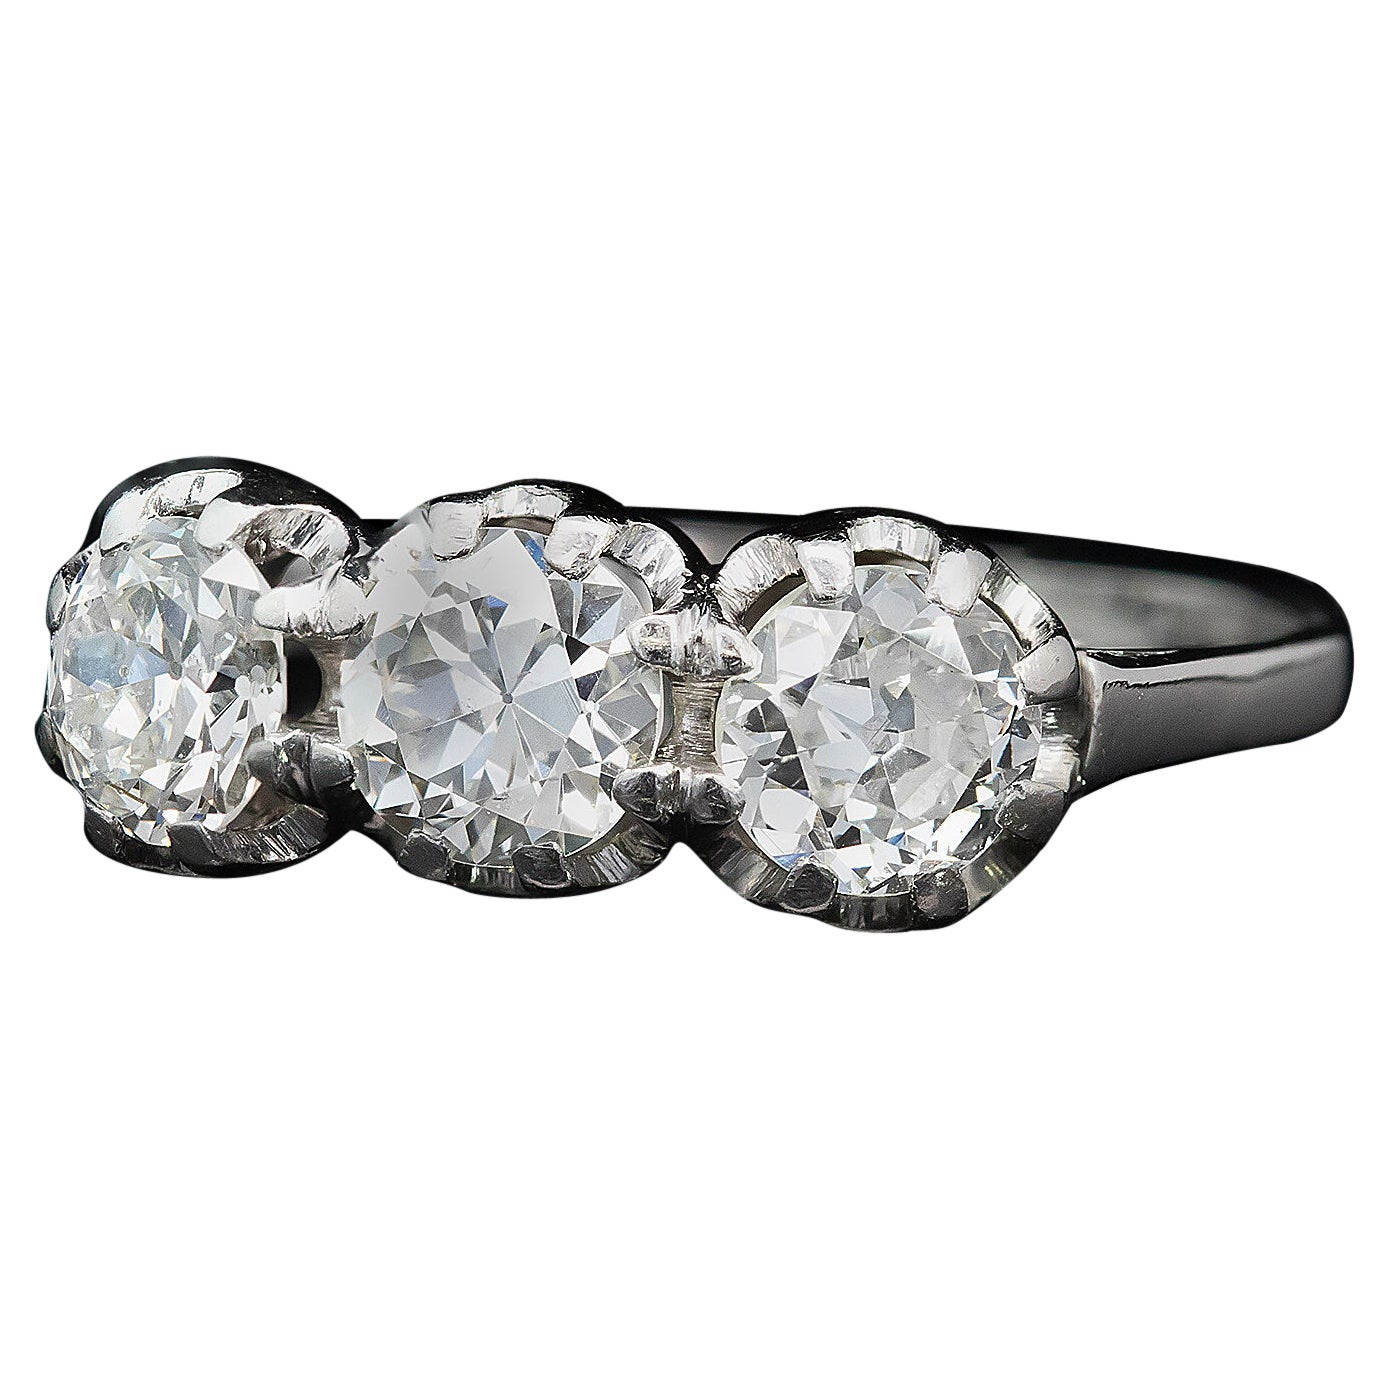 Art Deco Trilogy Diamond Ring Circa 1920's